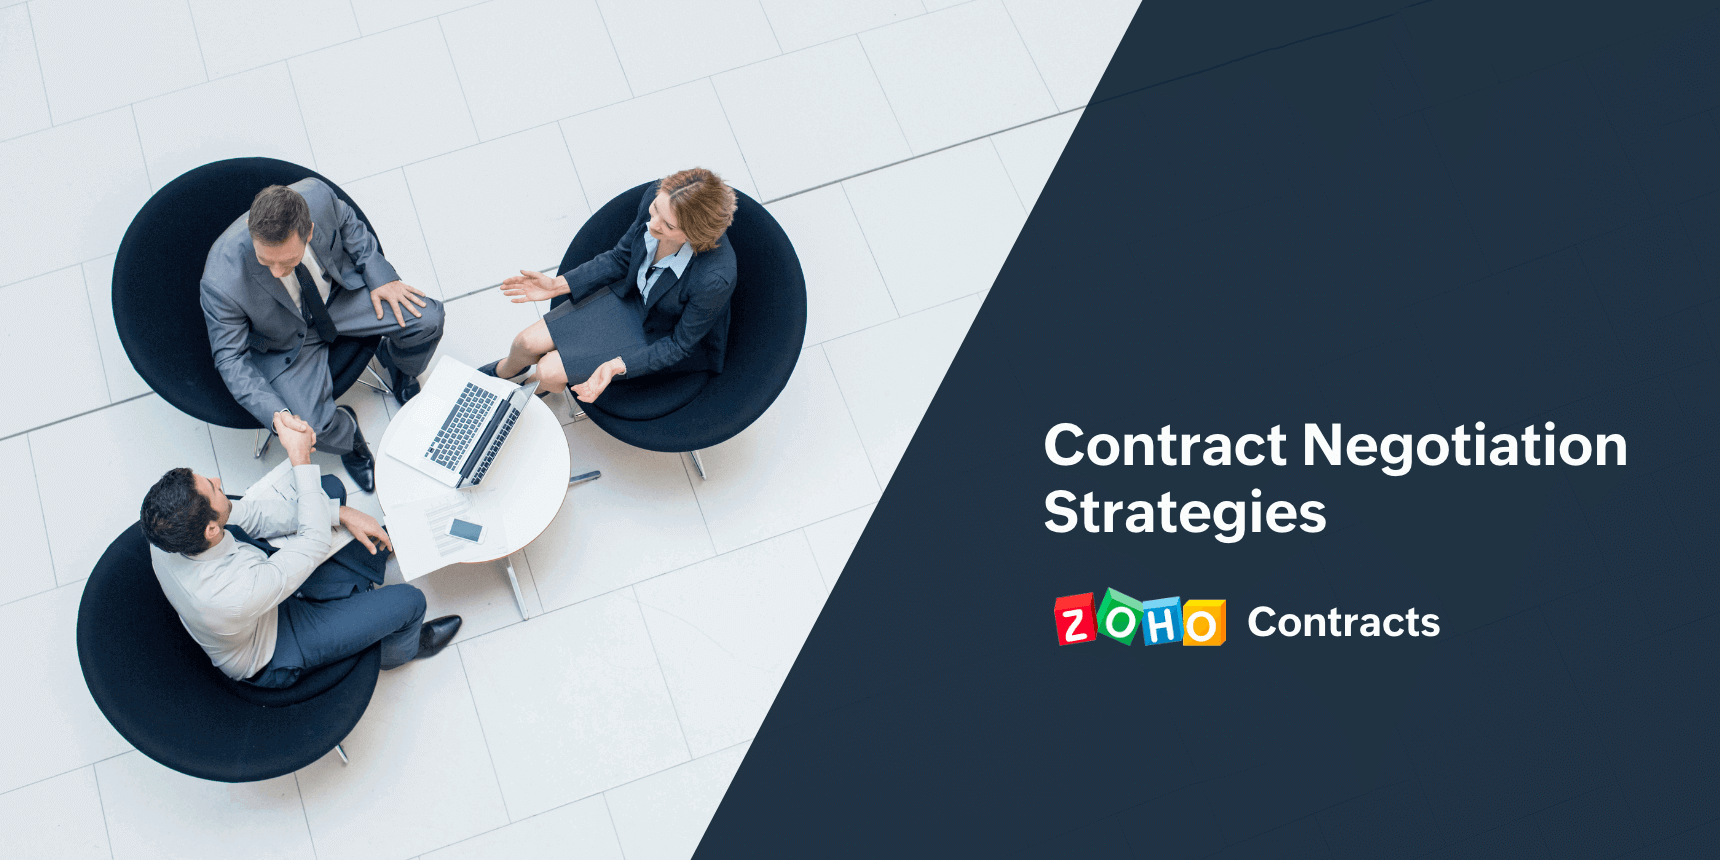 Contract negotiation strategies